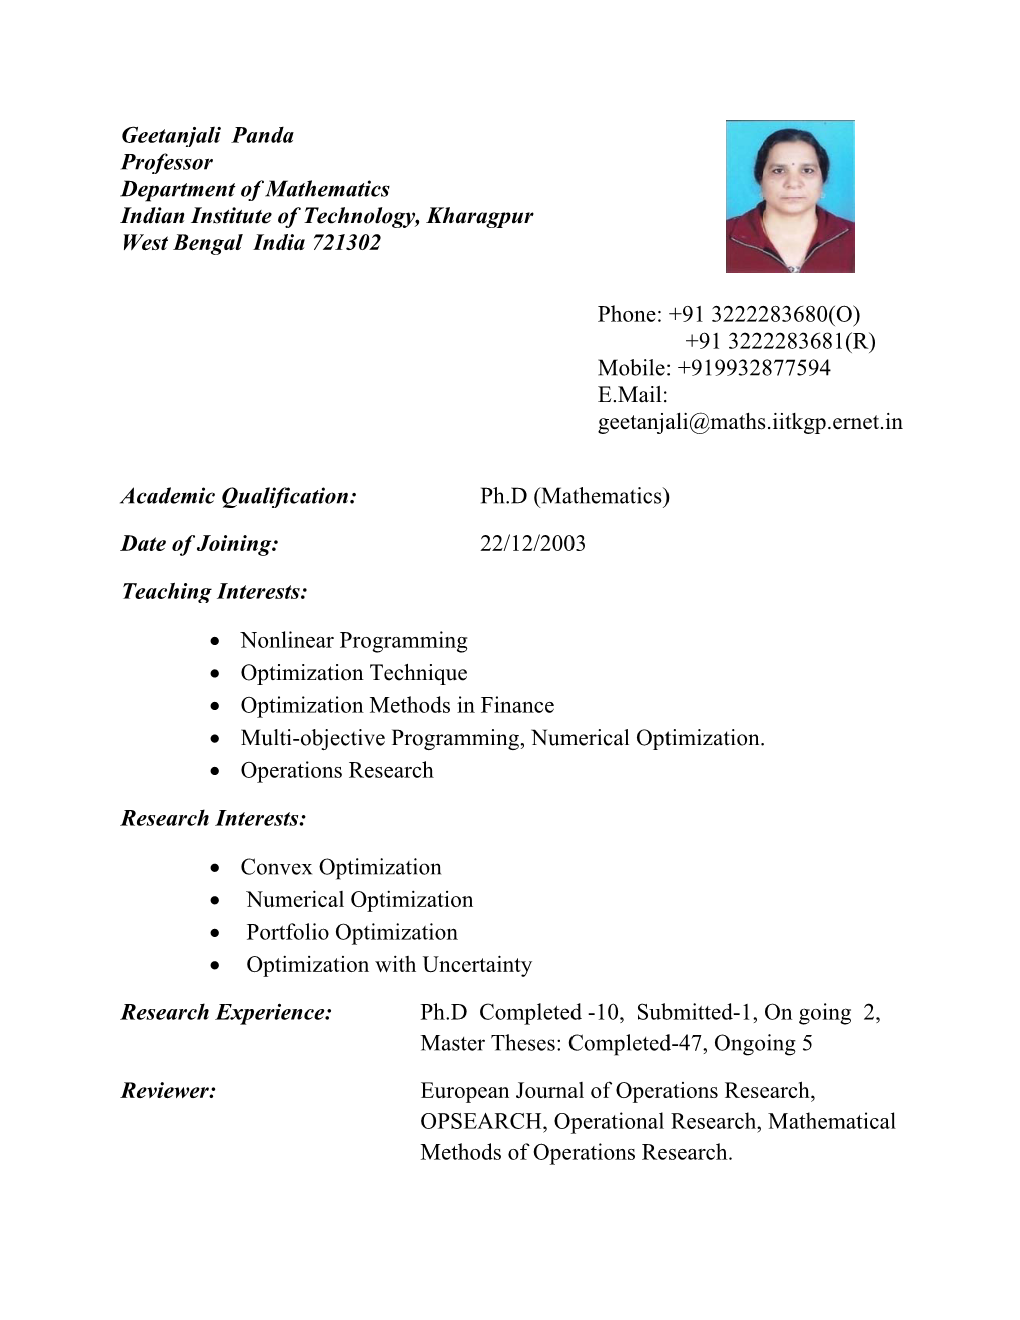 Geetanjali Panda Professor Department of Mathematics Indian Institute of Technology, Kharaga Pur West Bengal India 721302